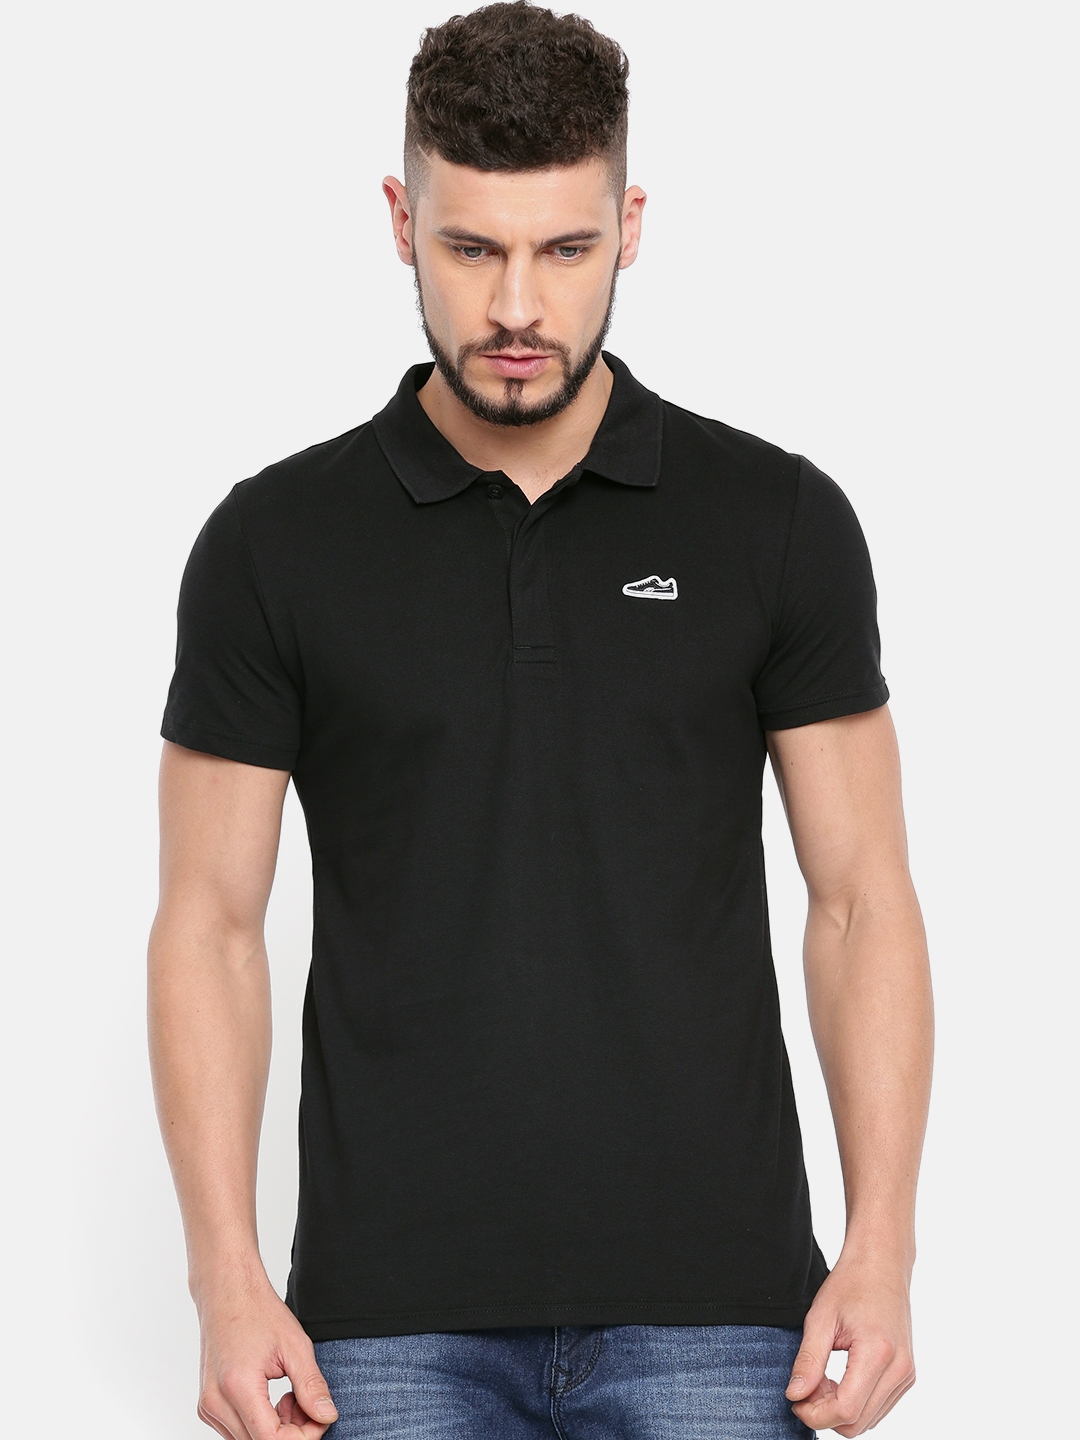 Buy Black Suede Polo Cotton T Shirt - Men 8172833 | Myntra